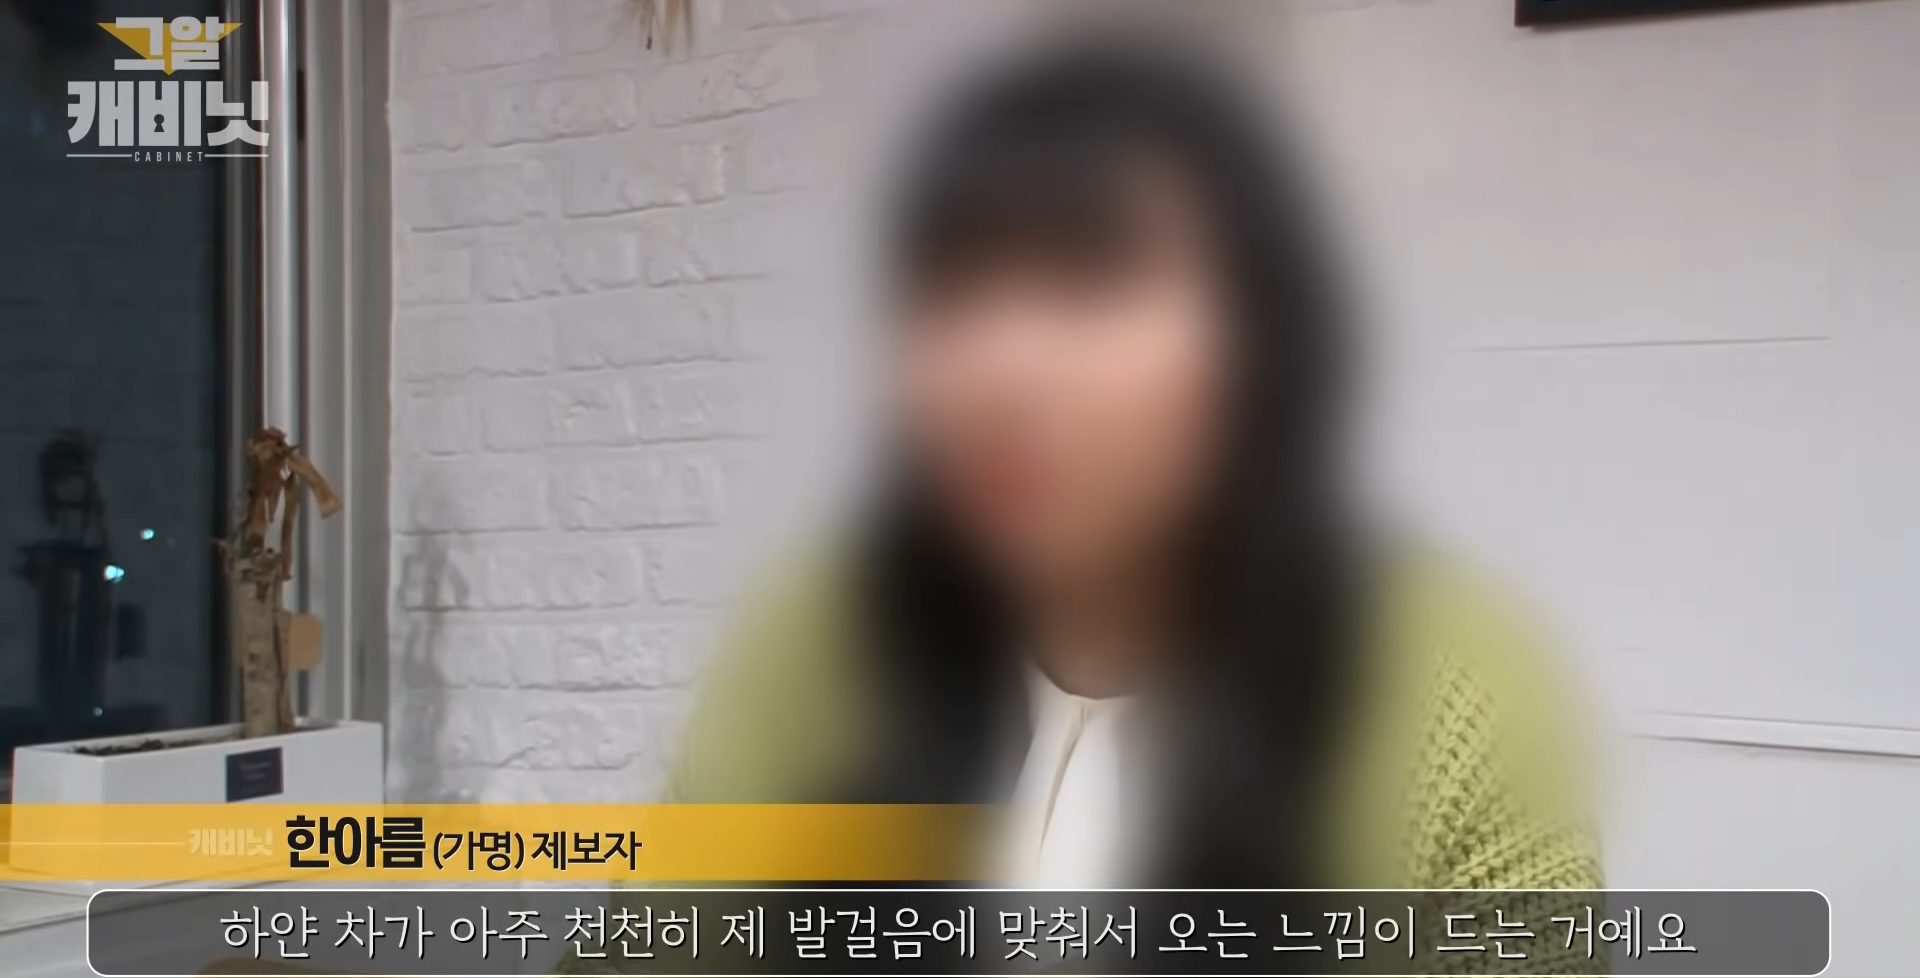 unsolved crimes in korea - victim